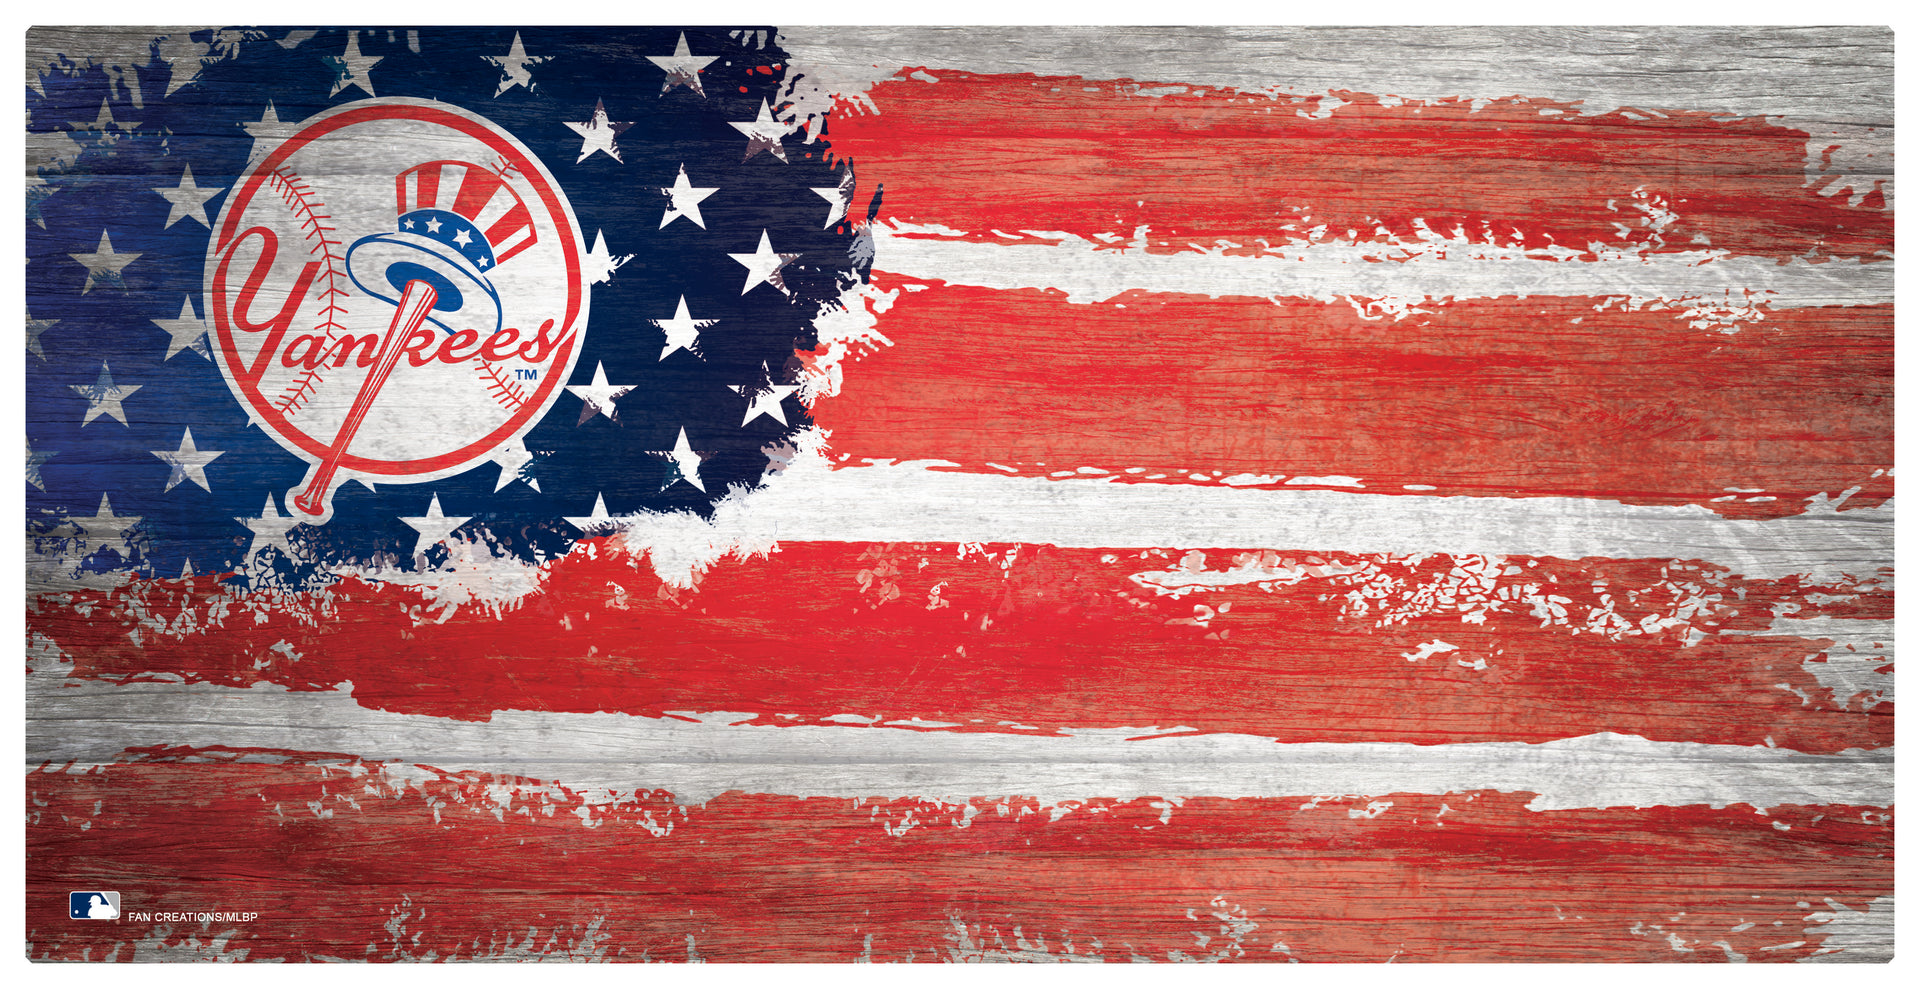 New York Yankees Team Flag Wooden Sign - Dynasty Sports & Framing 